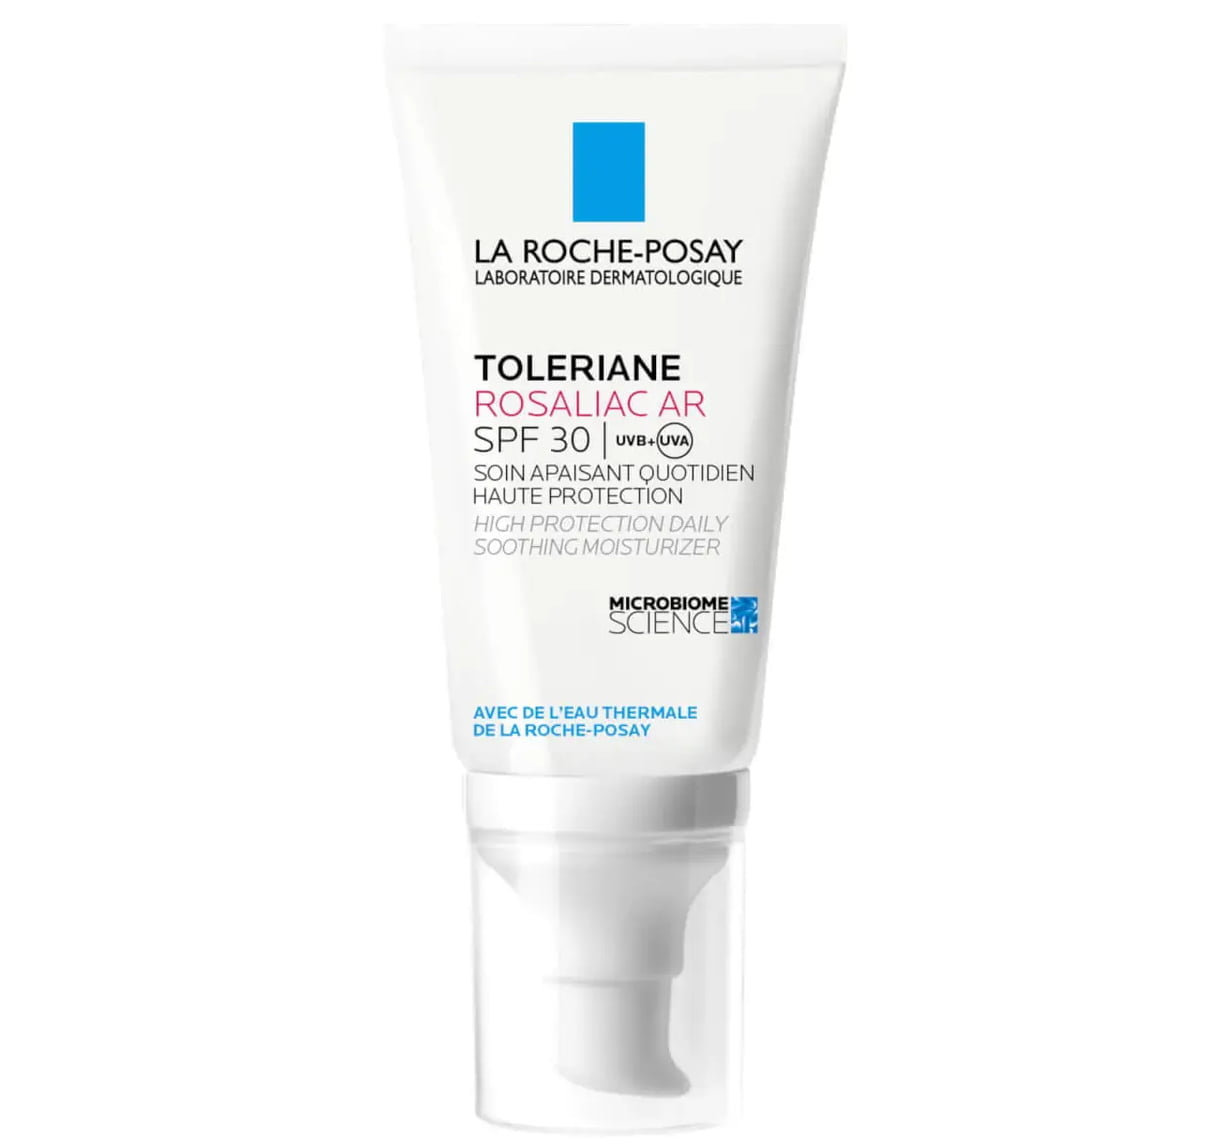 La Roche-Posay Toleriane Rosaliac AR SPF30 Moisturiser for Dry, Redness-Prone Skin